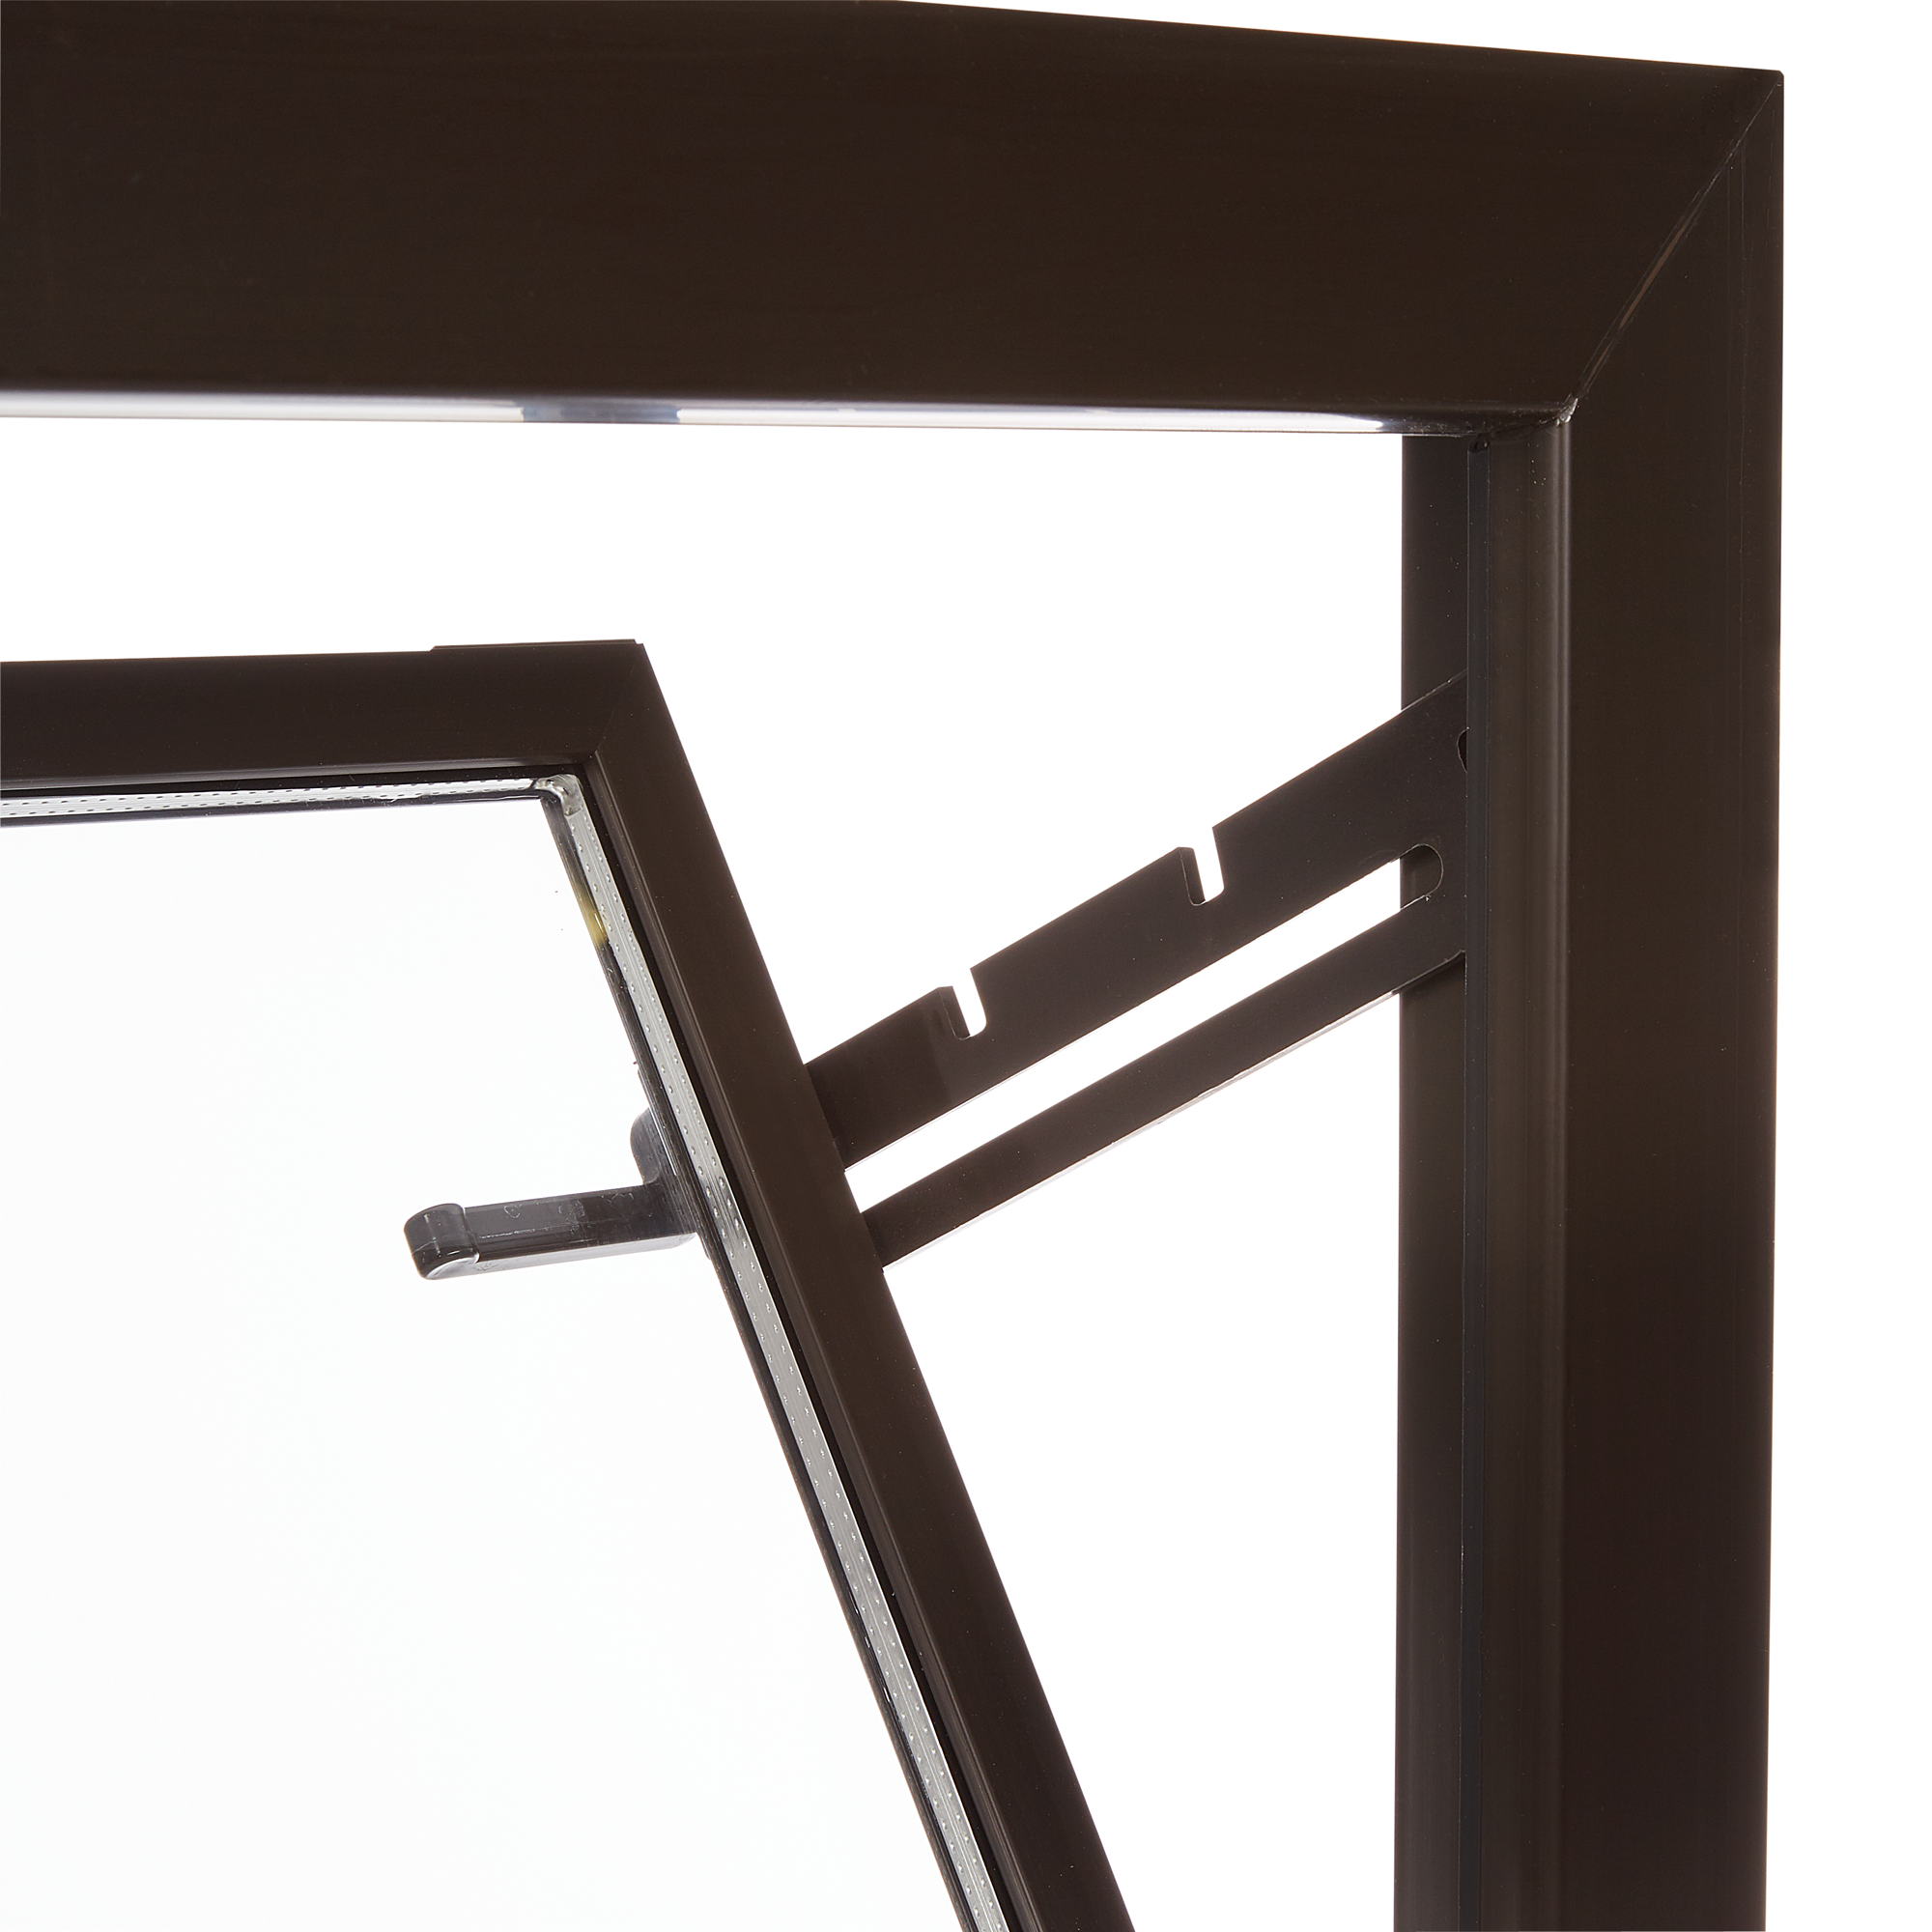 Kippfenster dunkelbraun 1-flügelig 80 x 40 cm + product picture